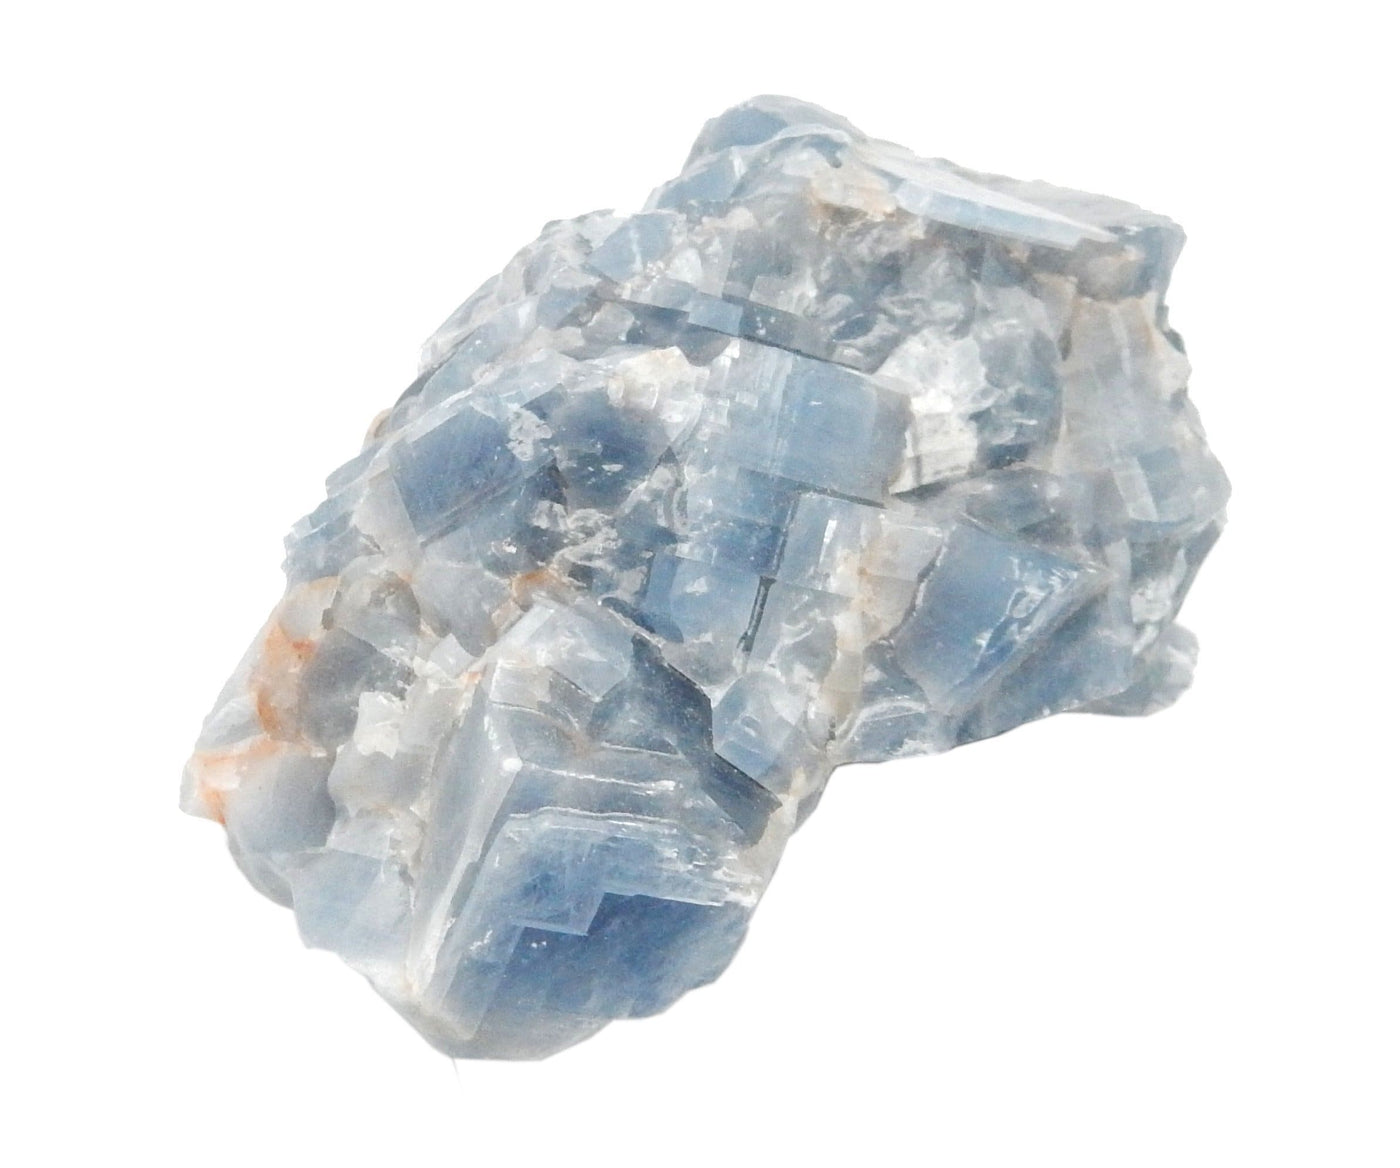 up close shot of blue calcite stone on white background